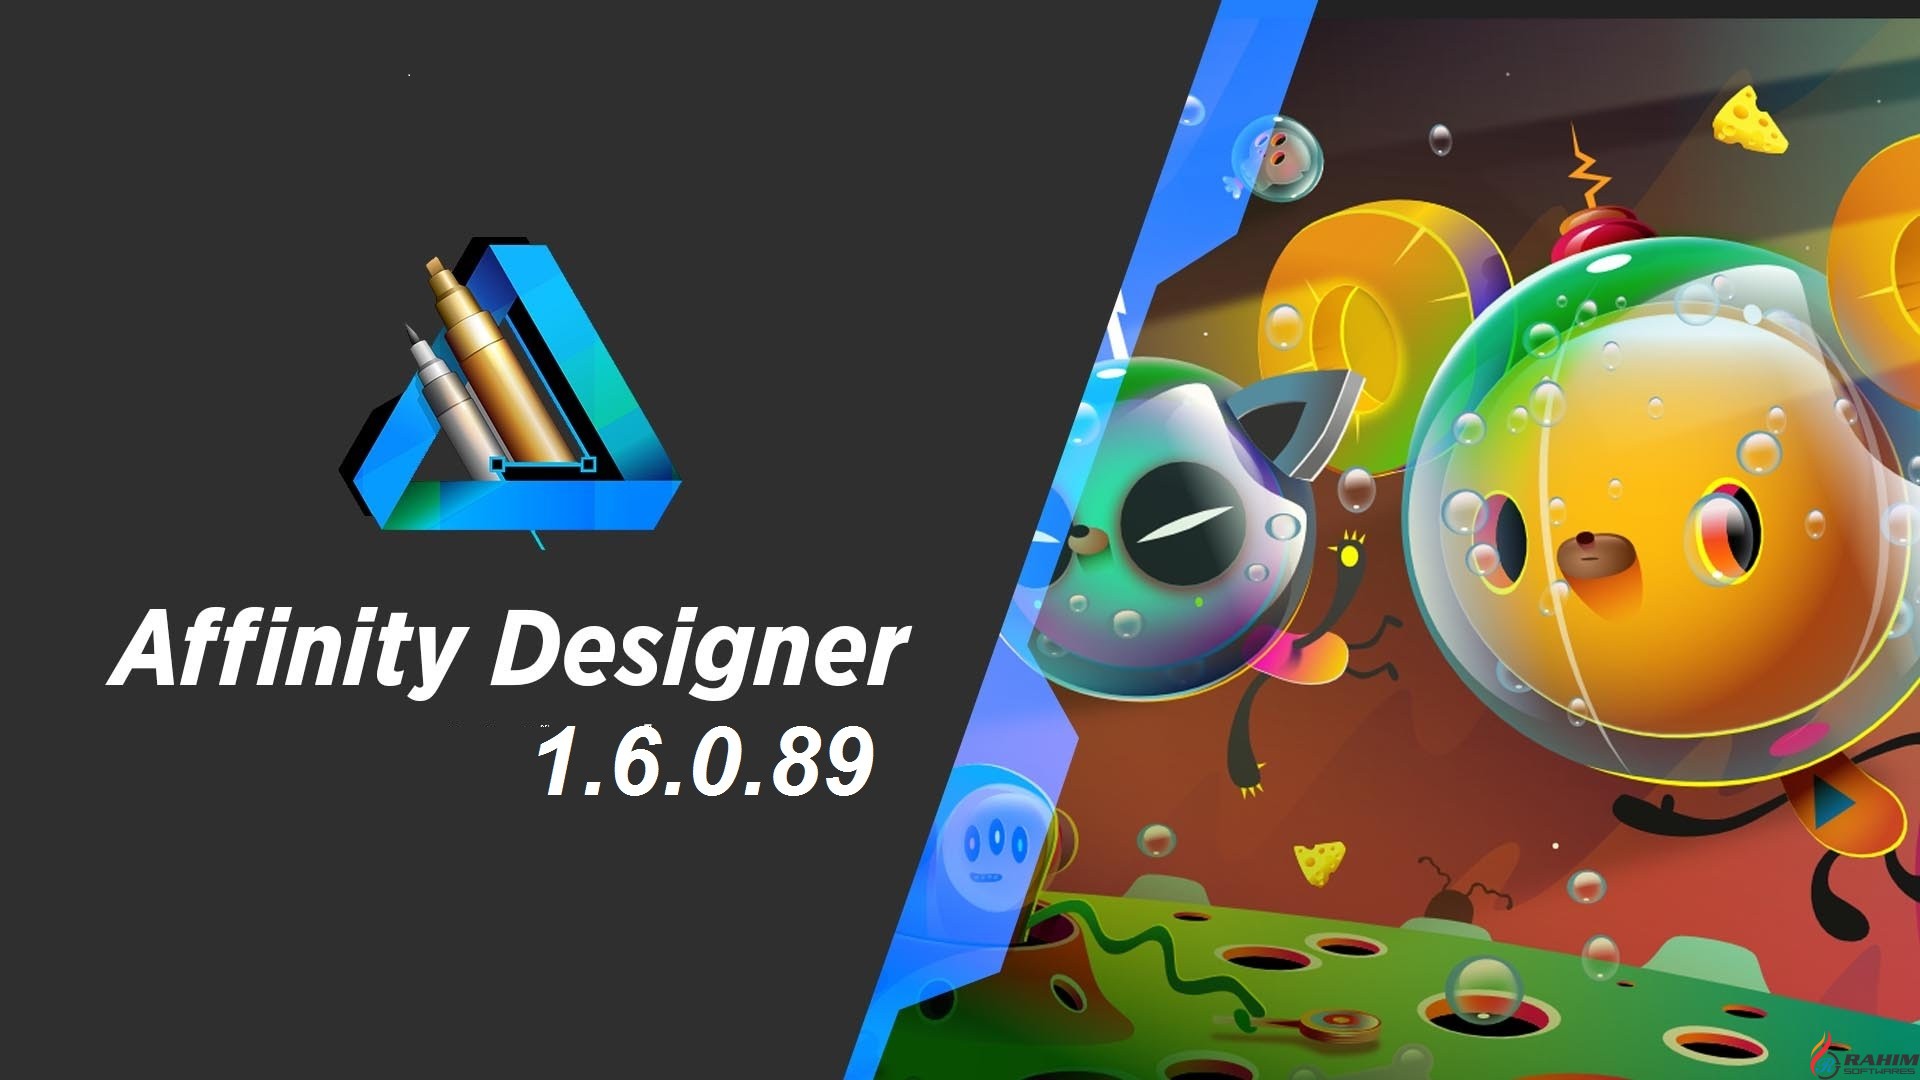 affinity designer free download full version for windows